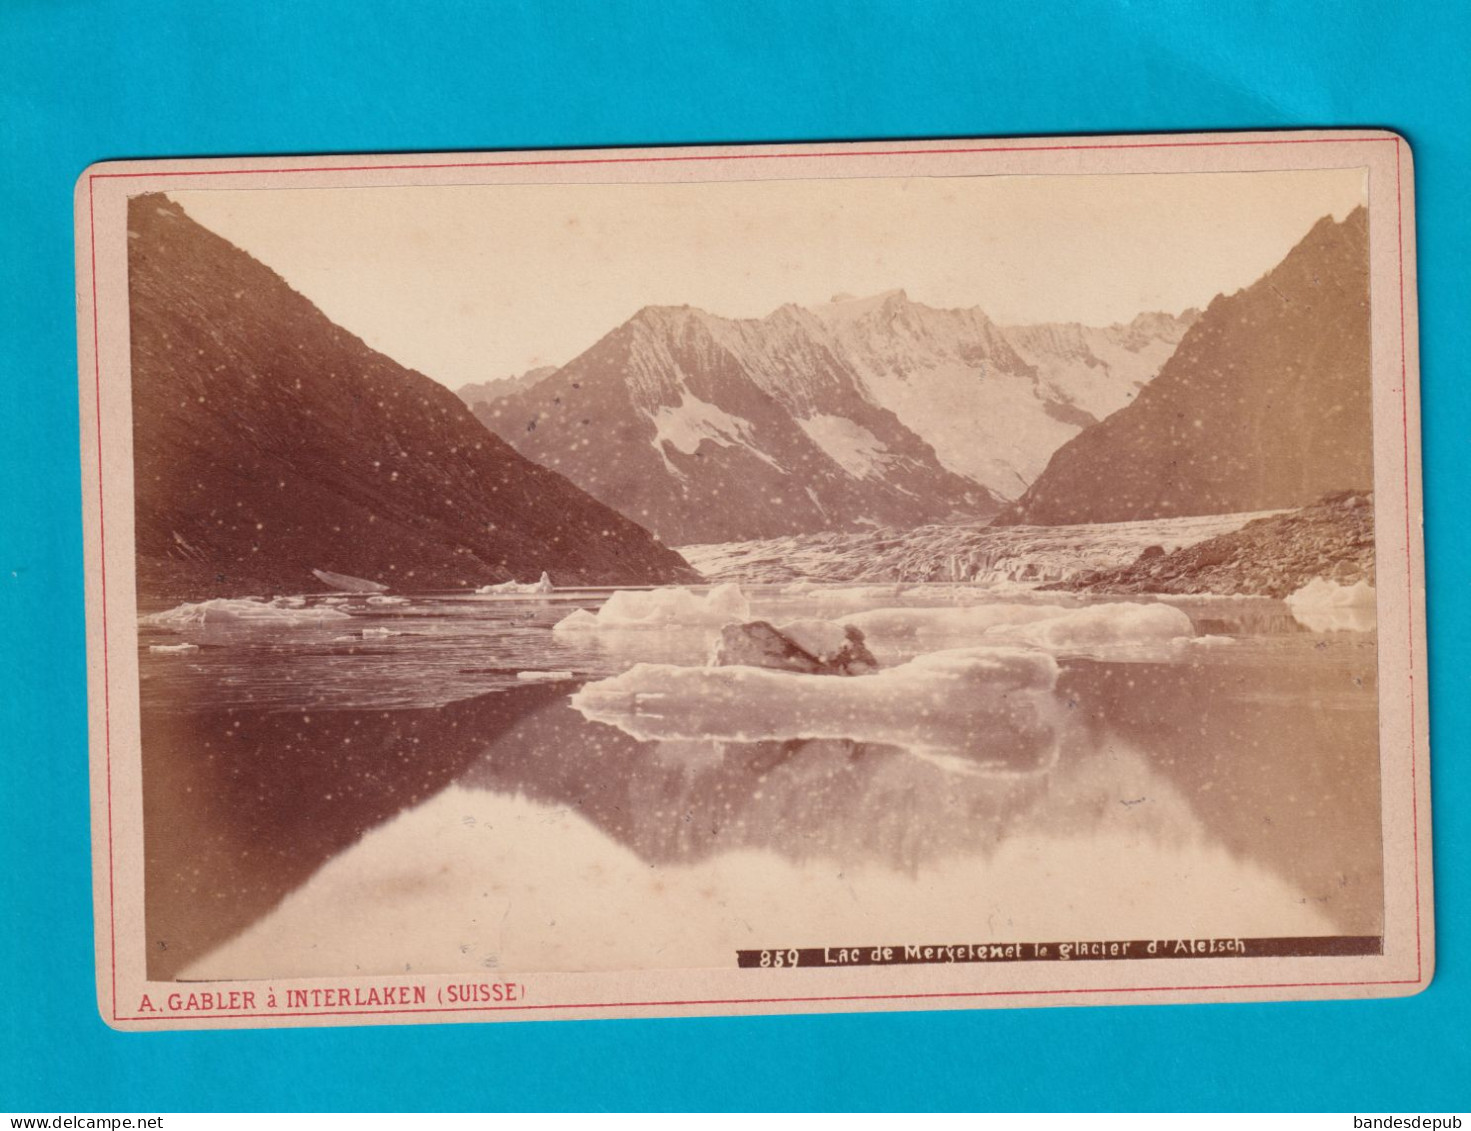 RARE  Old Photo  Gabler  Interlaken Switzerland Suisse LAC DE MERYELEN ET GLACIER D'ALETSCH  Circa 1880 - Oud (voor 1900)